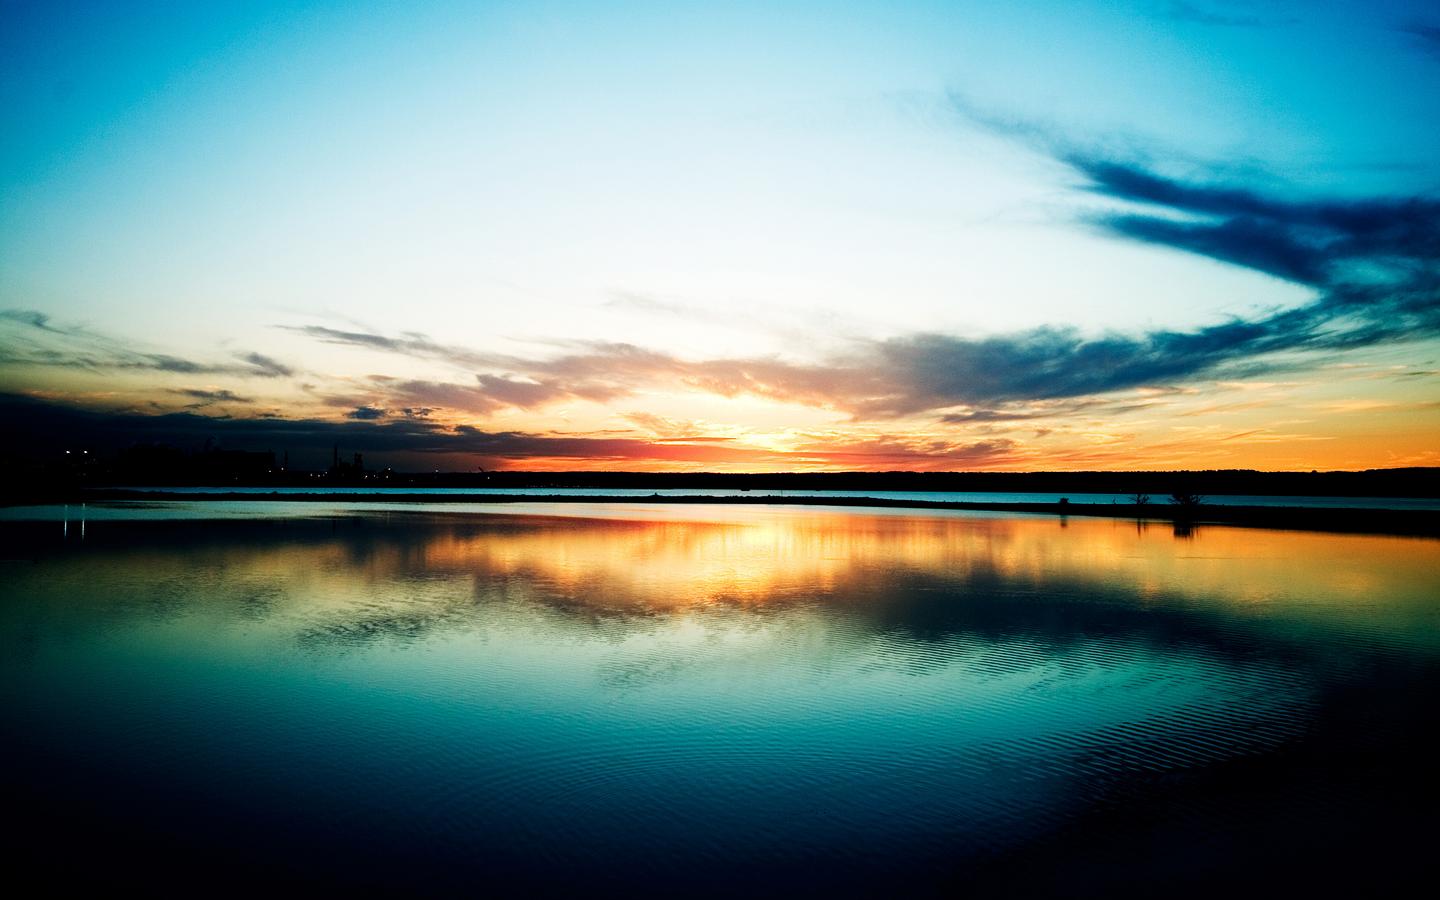 https://blogger.googleusercontent.com/img/b/R29vZ2xl/AVvXsEjvtRQrZR3wuCGOM6Ur2iYrOoZCKSRNg4T76jRpz3zixmU2G2ZDtss49ZpCMdzlbFG3rA8FXIpTmIJonmVT3ShDTKJYTPkz51r0_etmpUzPB6CLgd6ac0oAPZUwmx5PSslz7Jf4M_tAzpo/s1600/painted-sunset-reflection-on-lake-sky-wallpaper.jpg